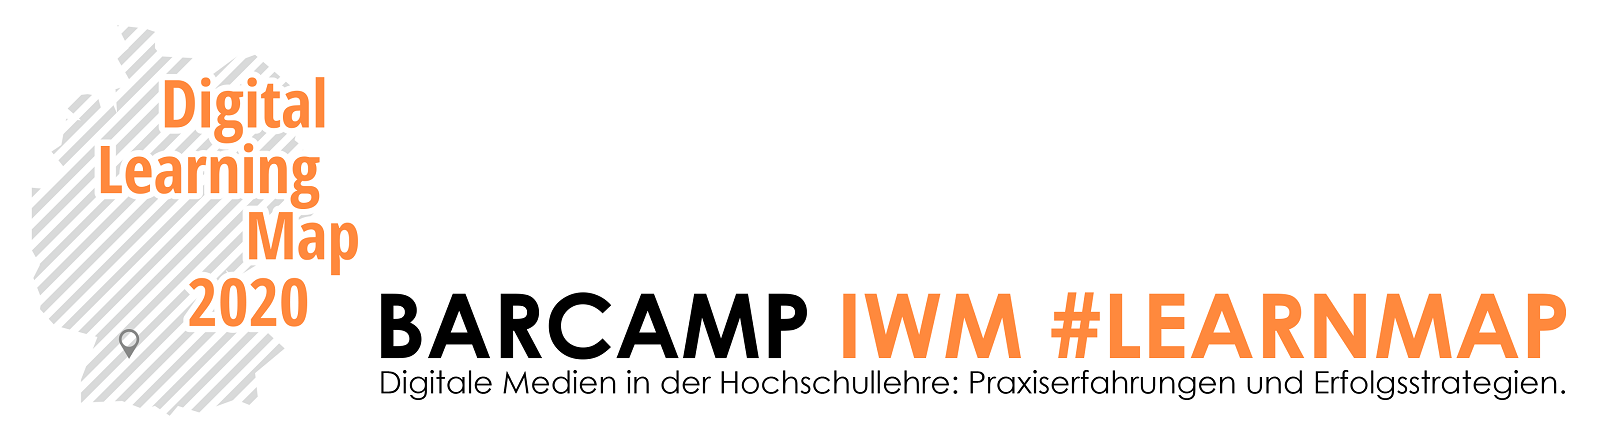 2019-07-11_Barcamp_IWM_LearnMap_Logo